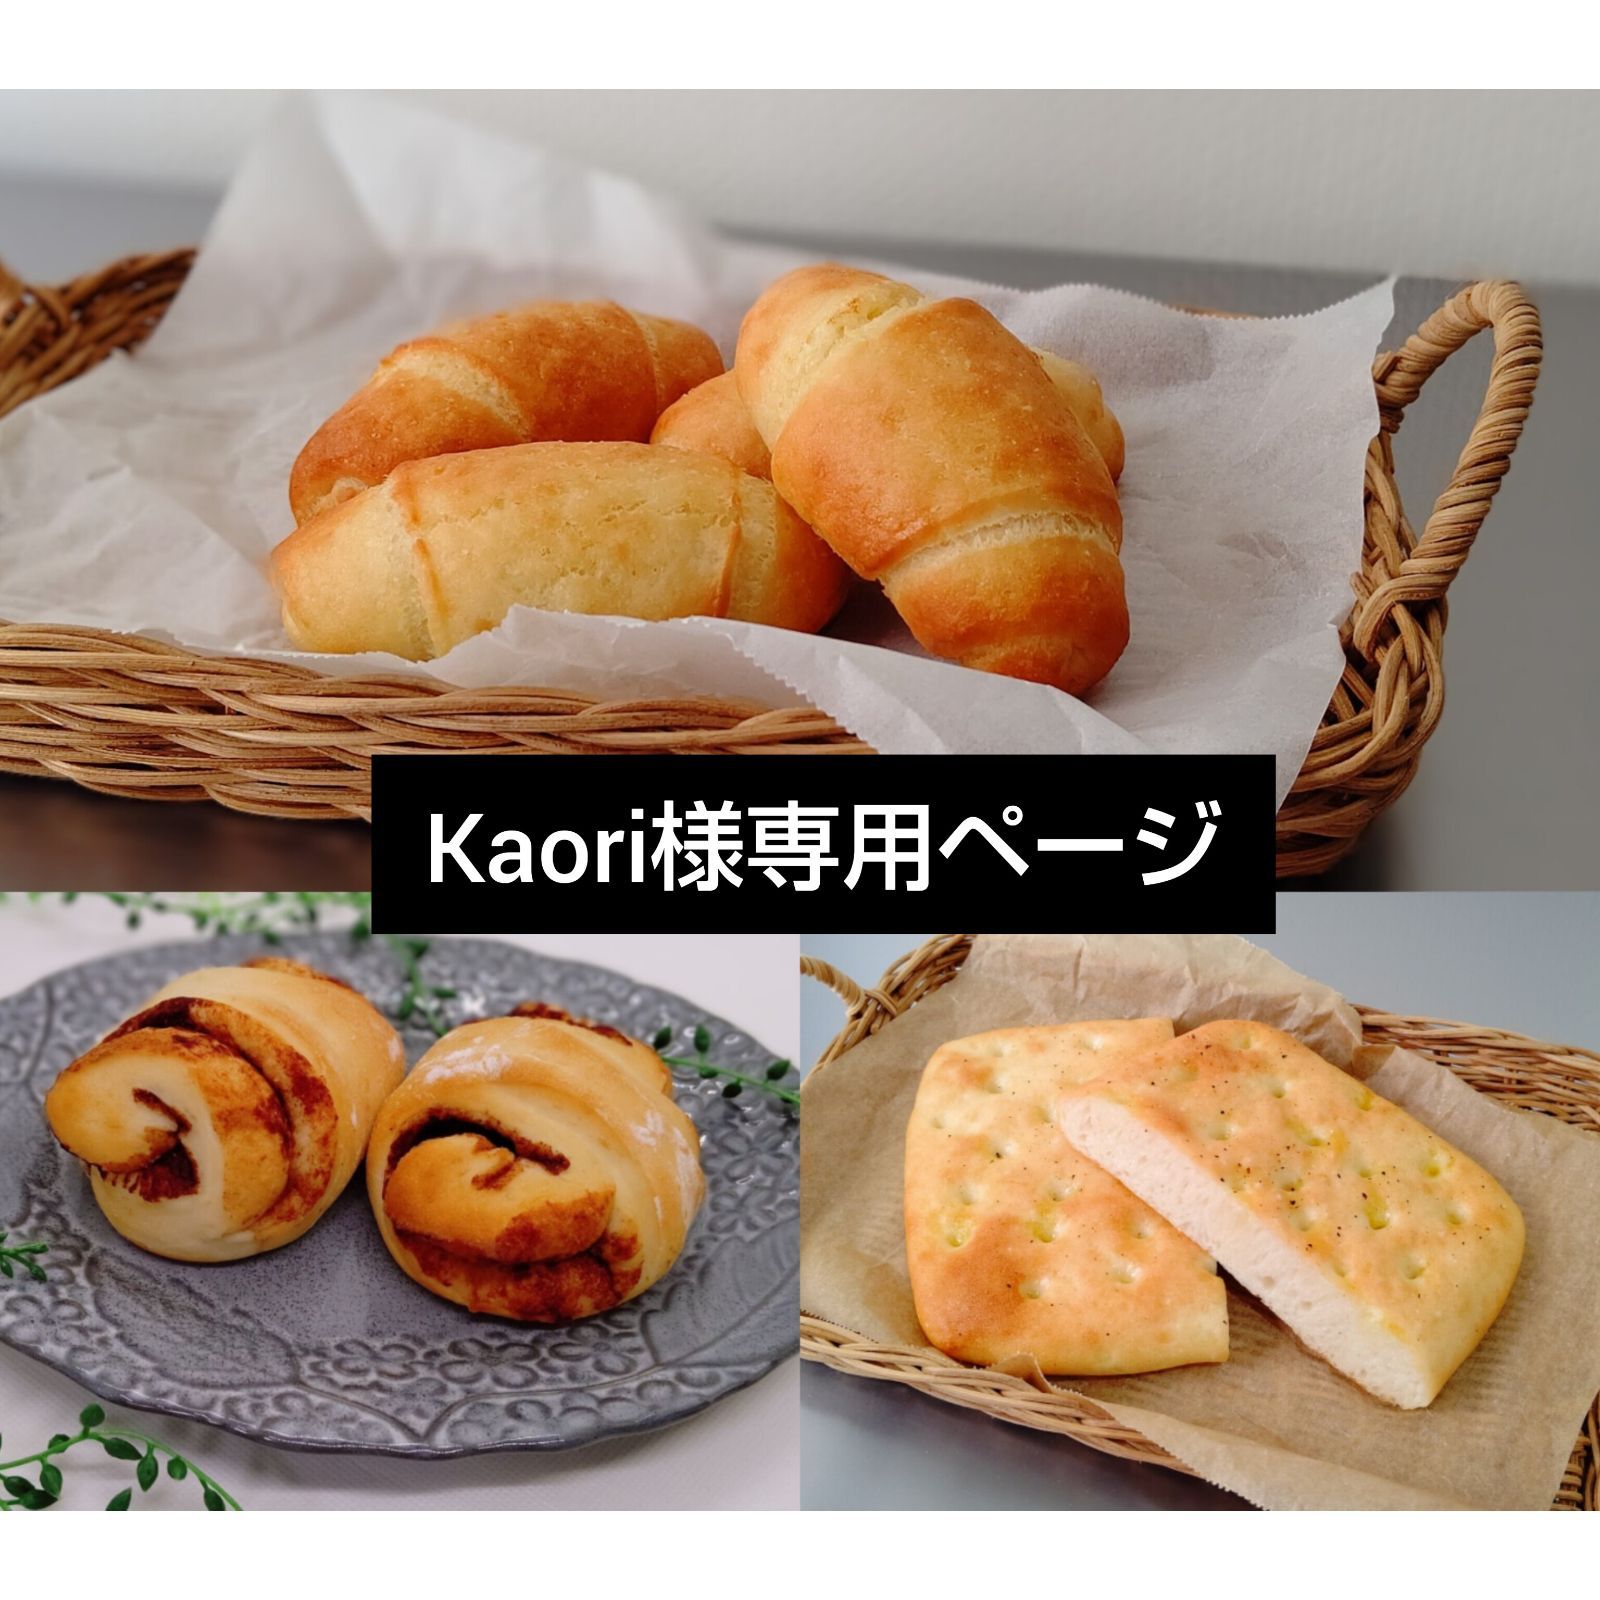 Kaori様専用 米粉パン - グルテンフリーパーク - メルカリ